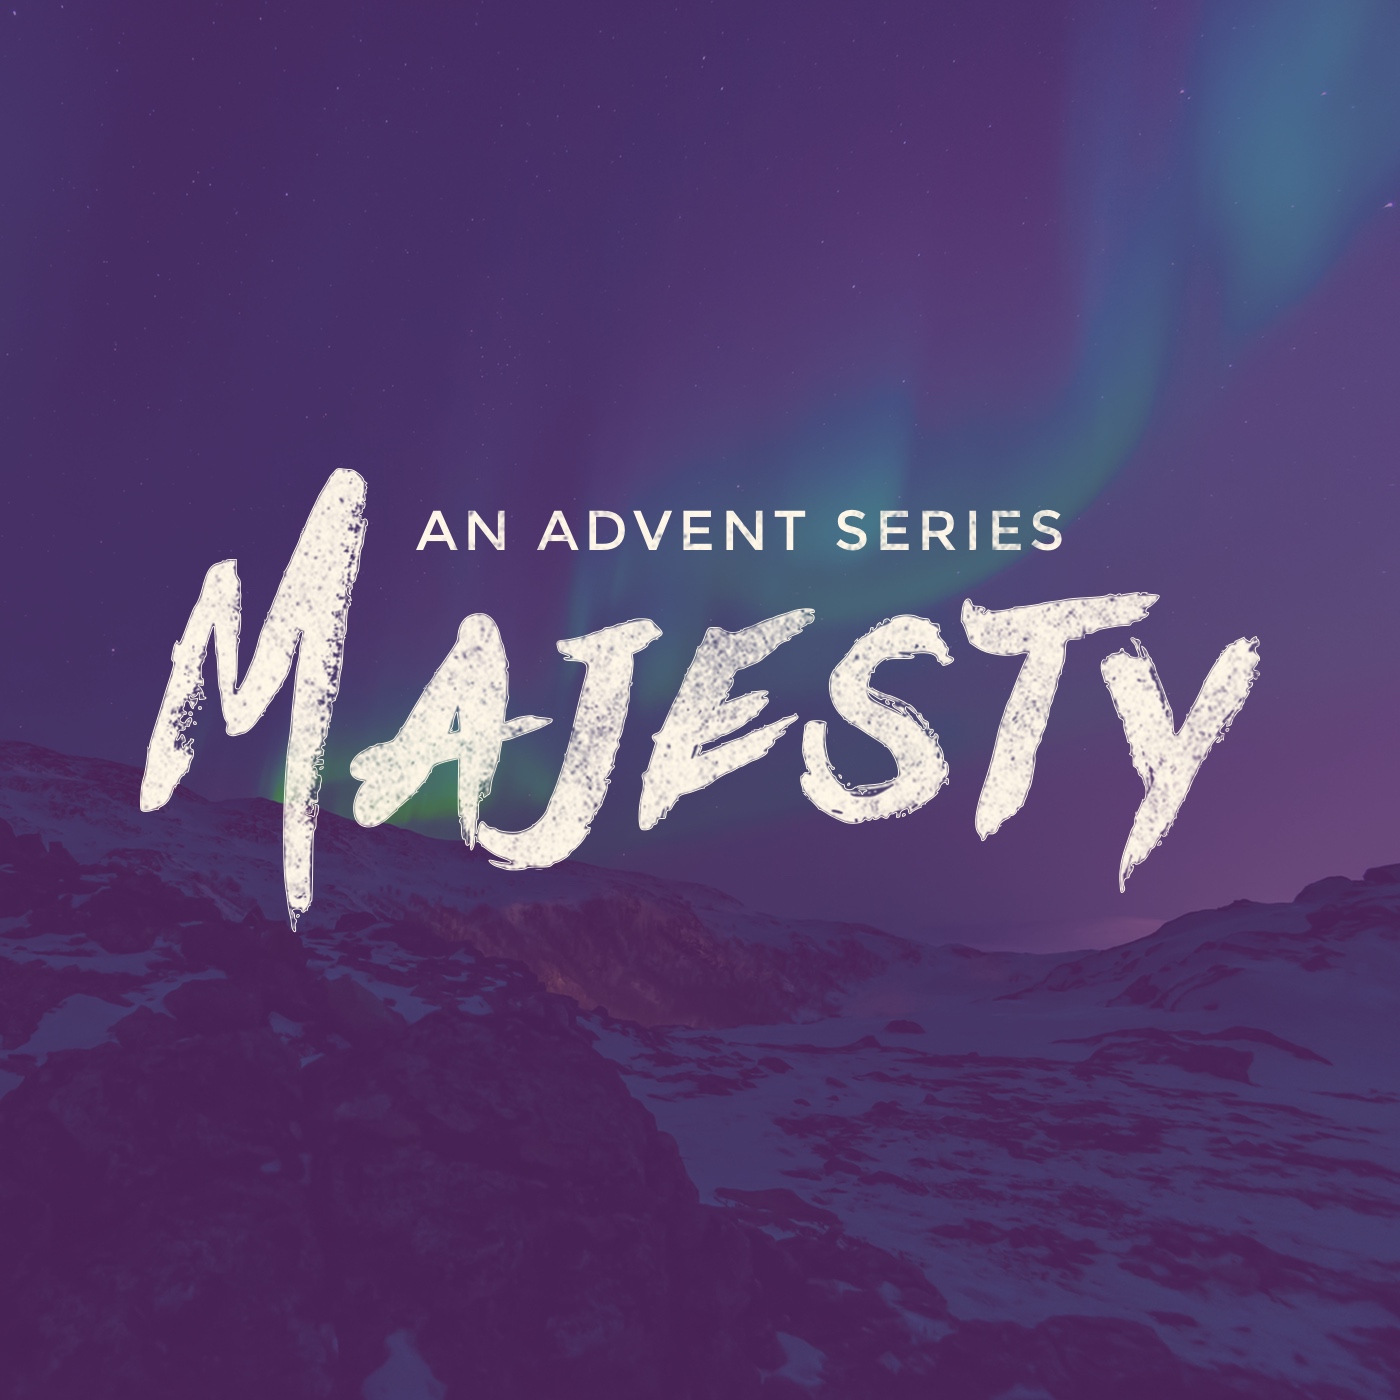 MAJESTY // 2. The Majesty of God Revealed in the Hope of Christ